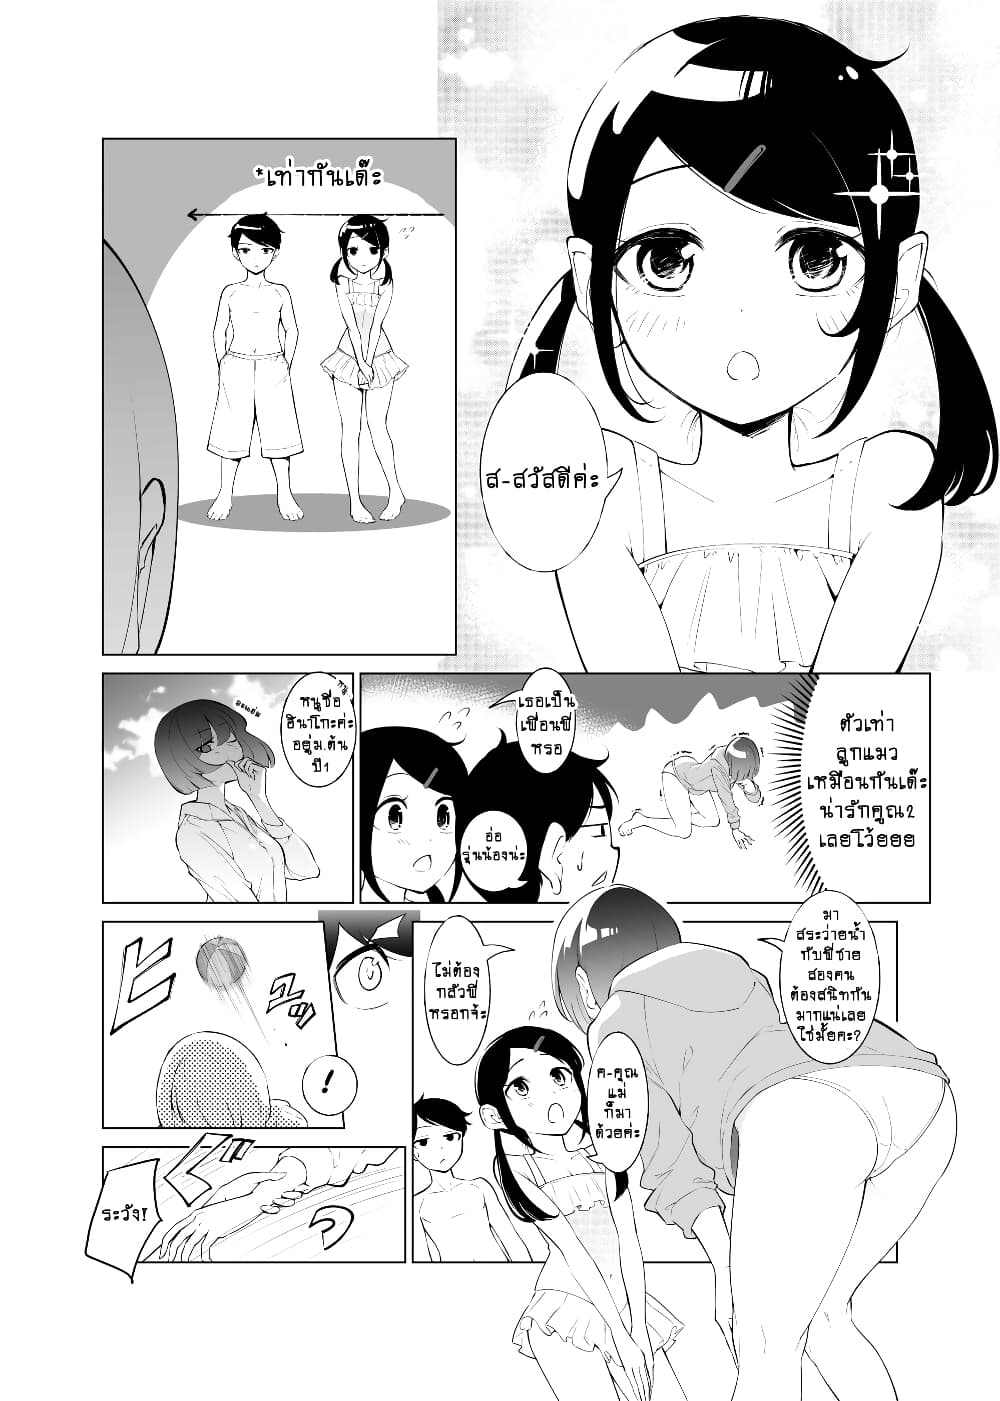 Until the Tall Kouhai (Girl) and the Short Senpai (Boy) Develop a Romance5 2